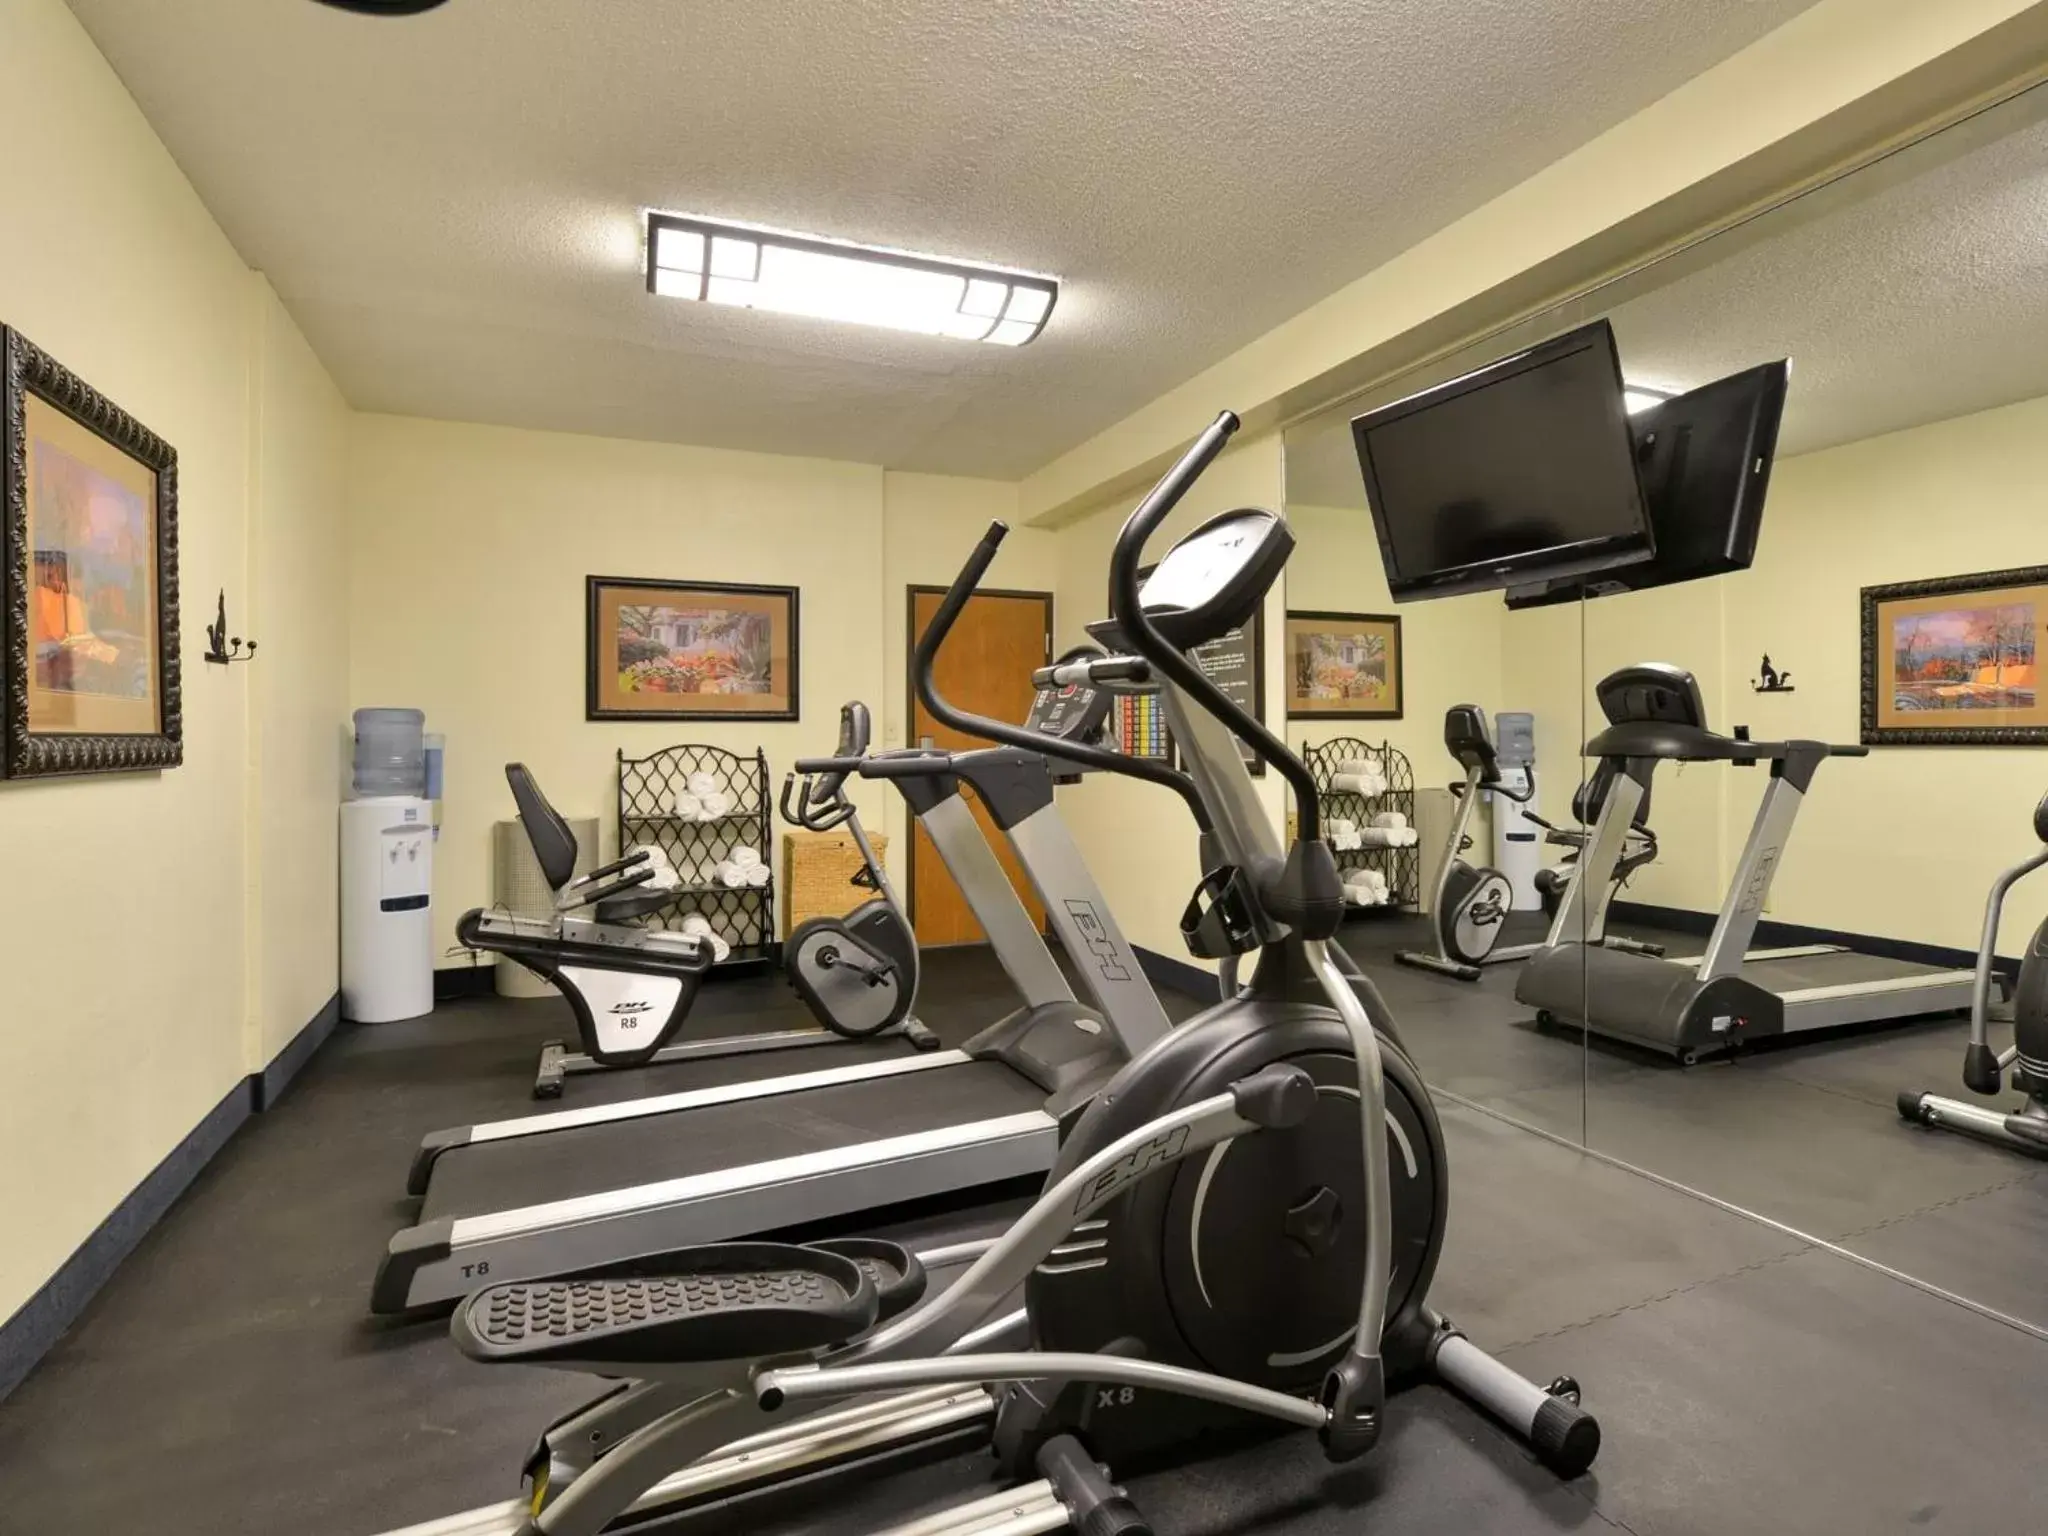 Fitness centre/facilities, Fitness Center/Facilities in Best Western Plus Inn of Santa Fe